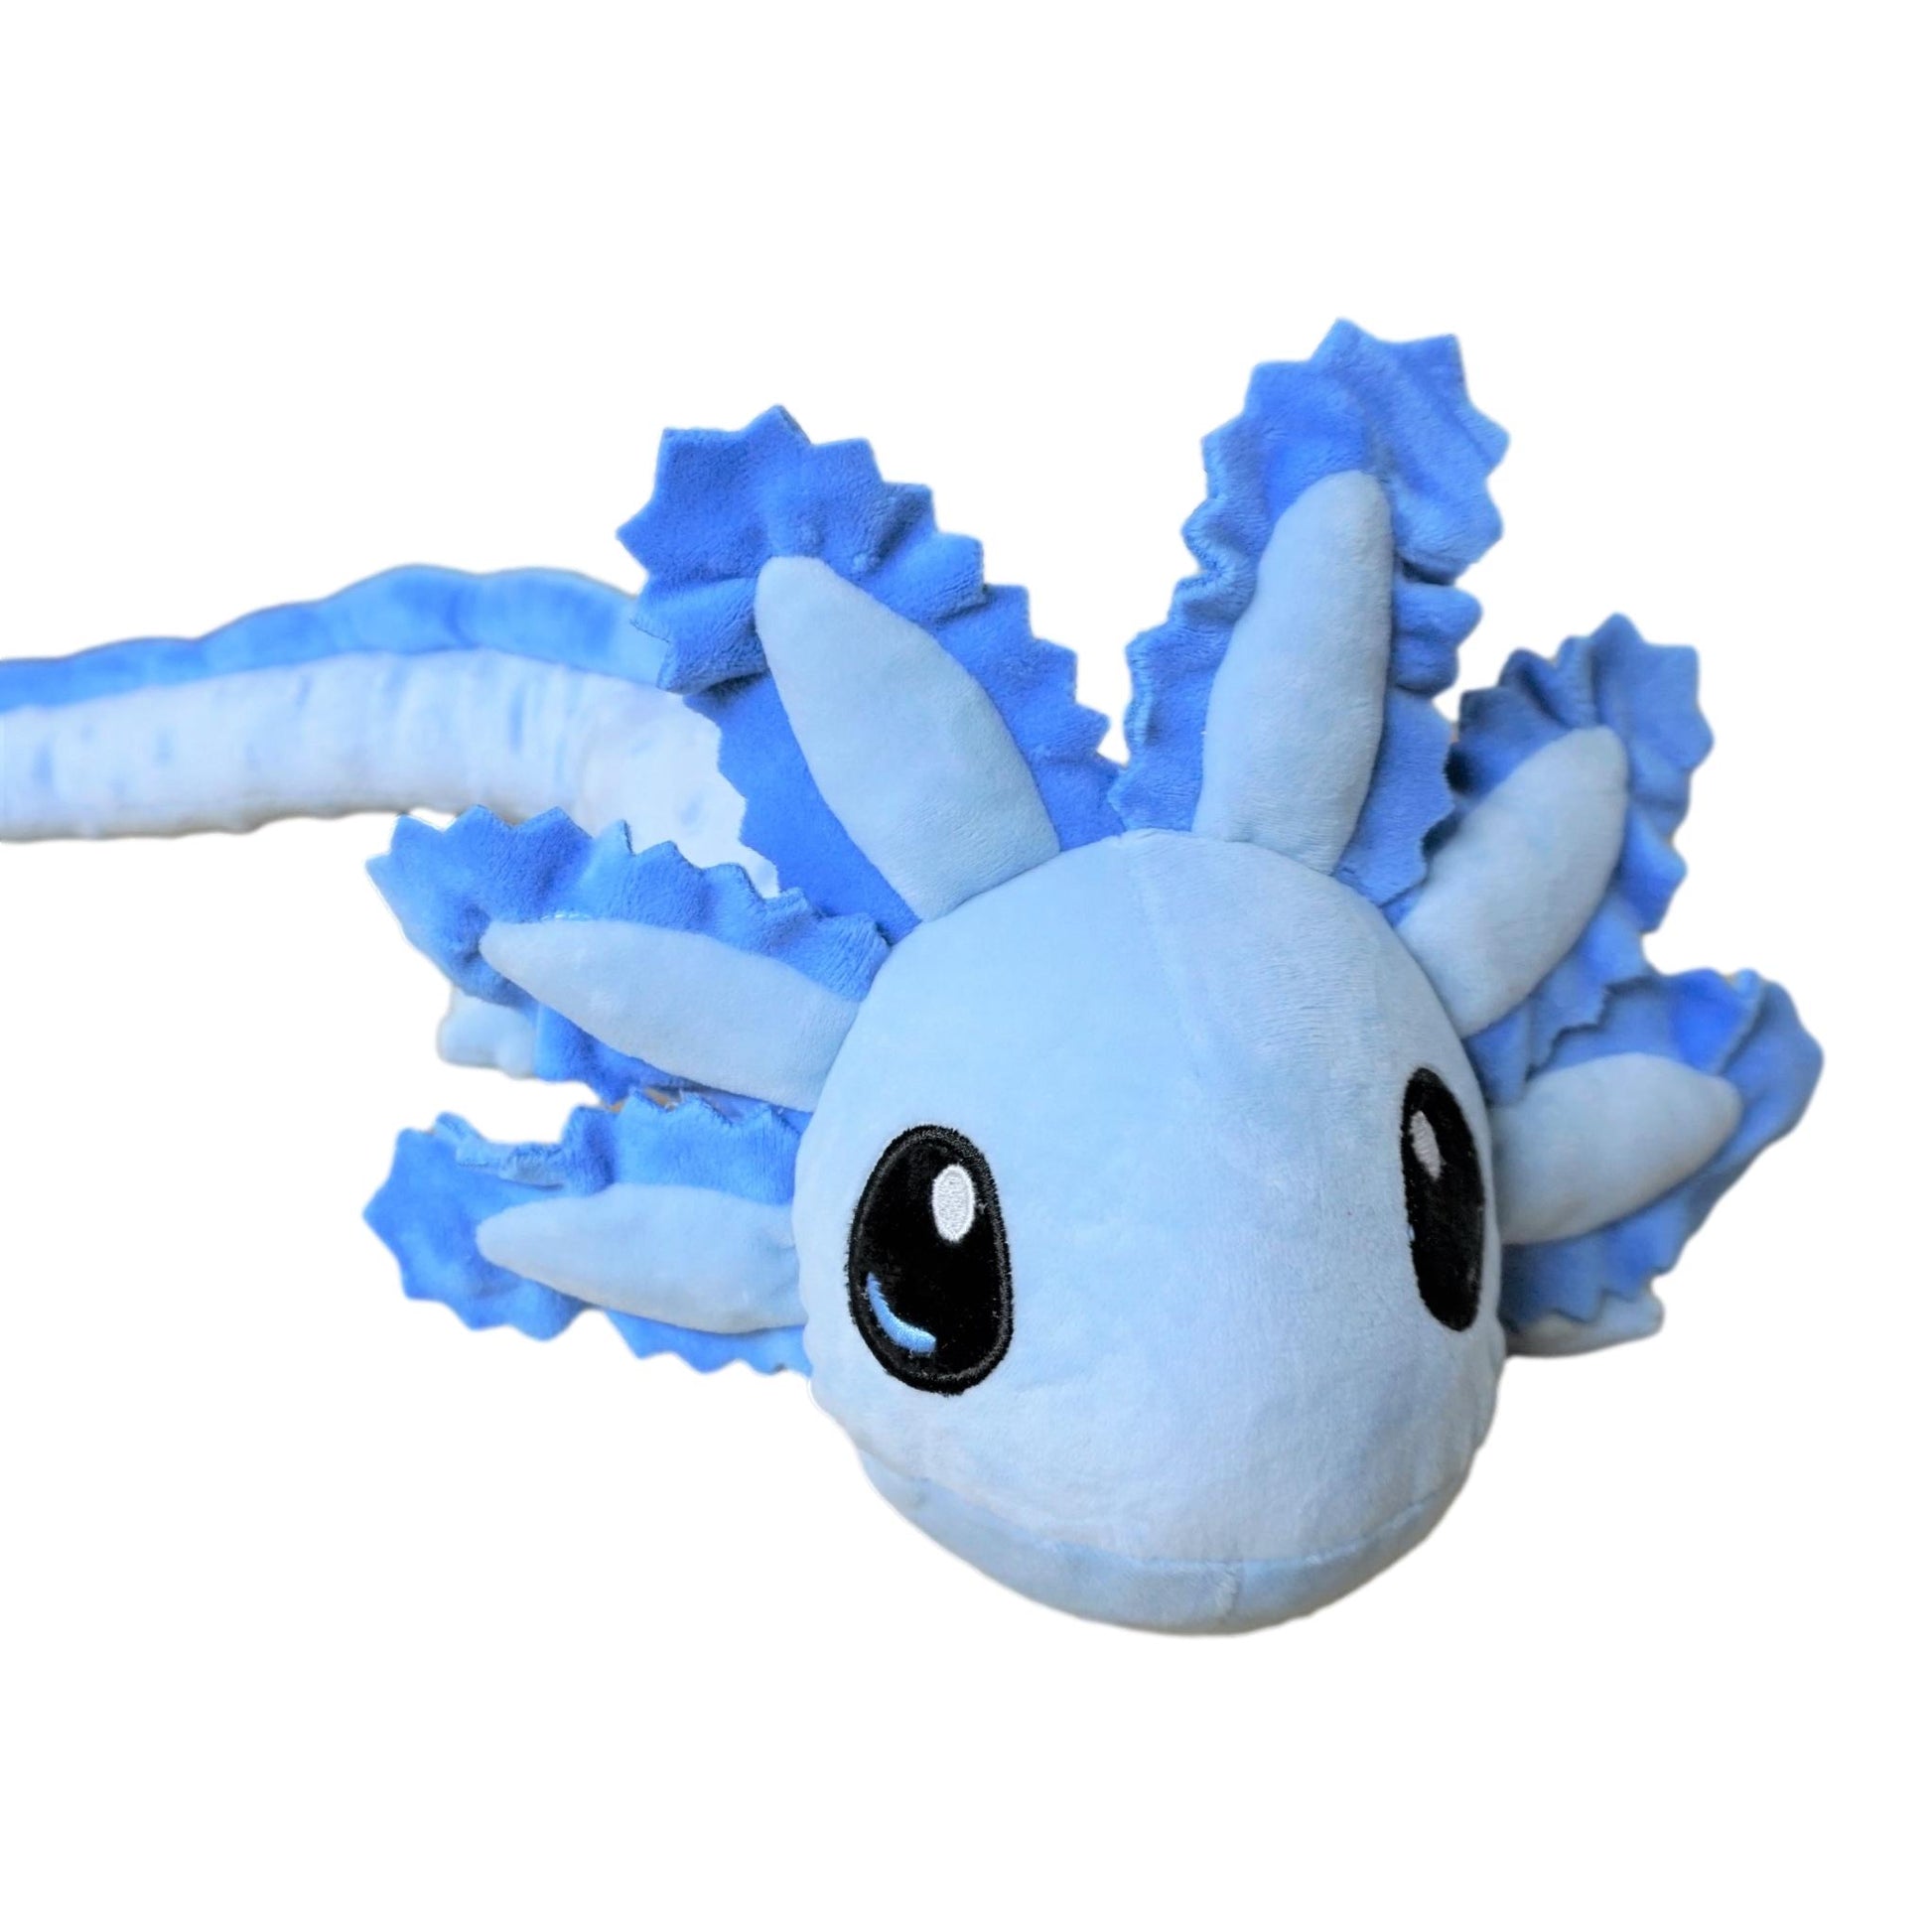 SENSORY4U Weighted Axolotl Stuffed Animal- Super Soft, Cute Plush Axol –